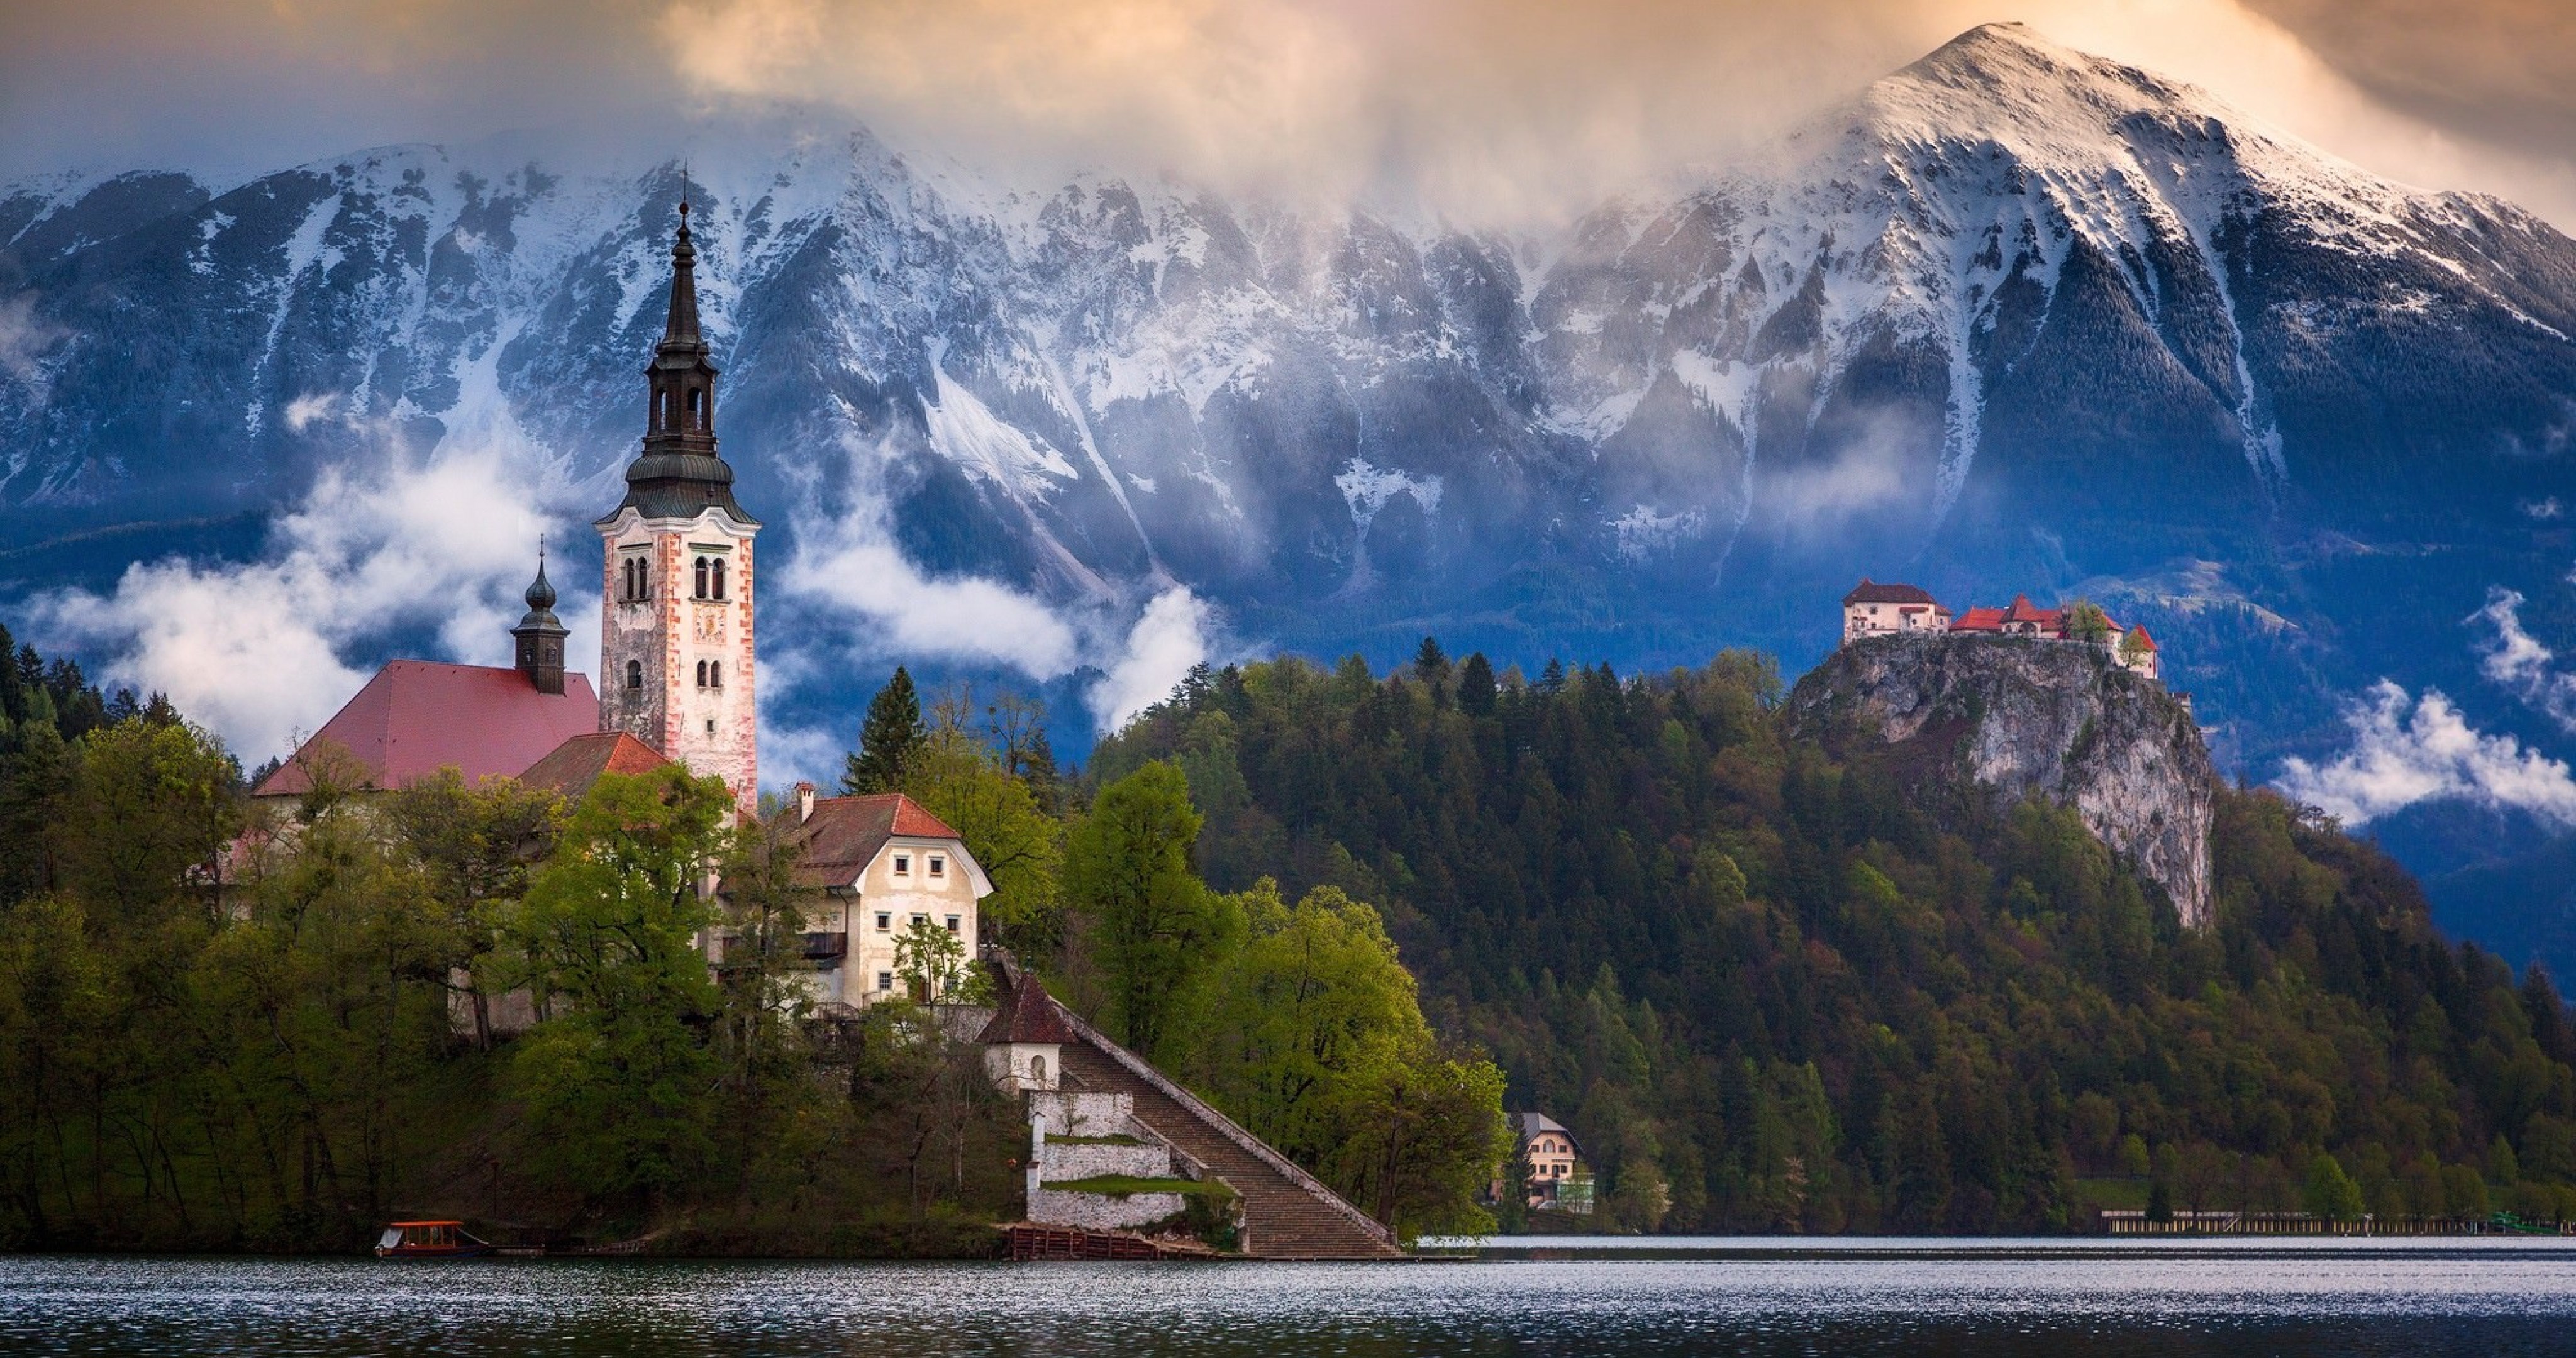 Slovenia Lake Bled 4k Ultra HD Wallpaper High Quality Walls